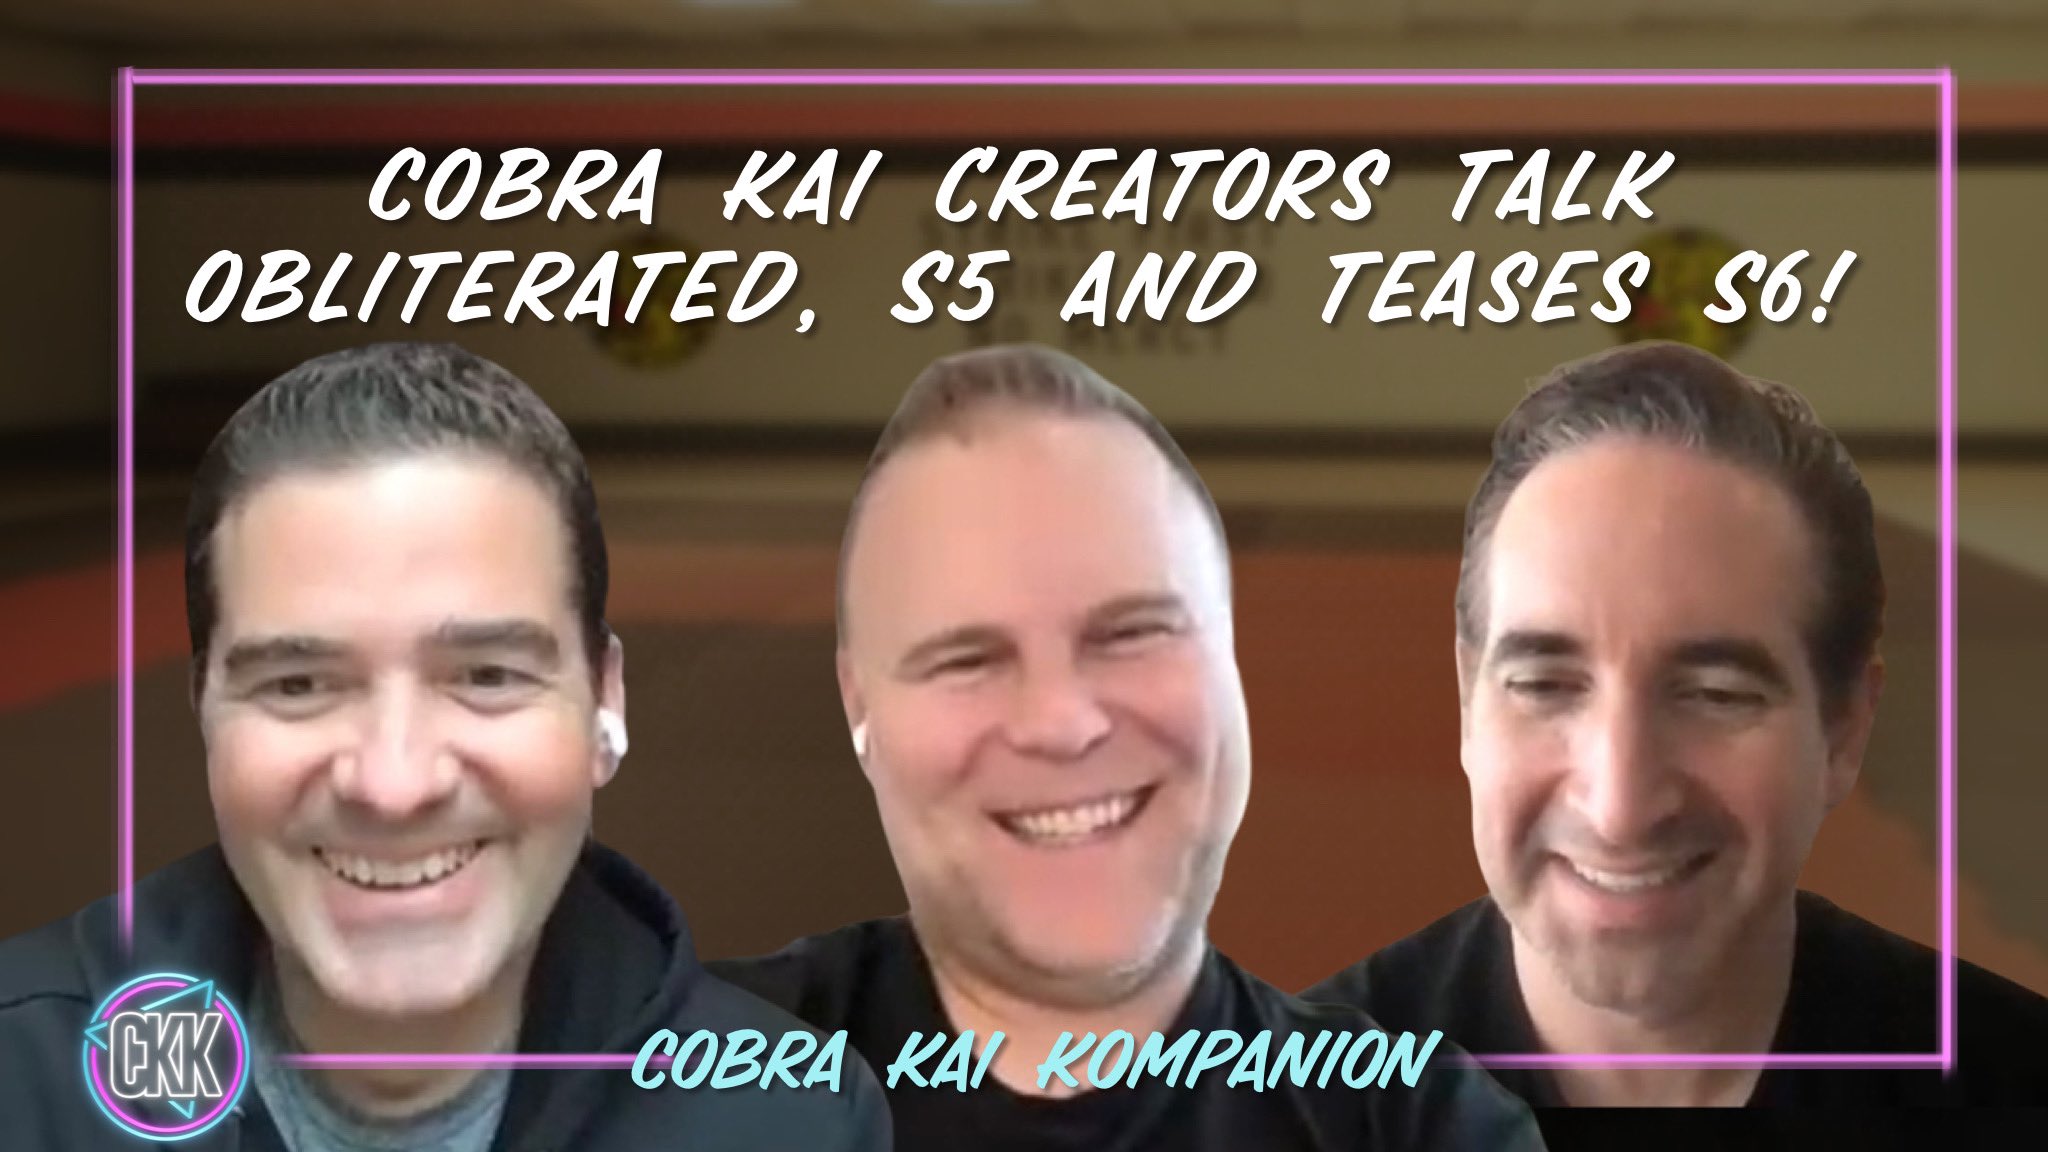 Cobra Kai Kompanion Podcast on X: Looking for a Cobra Kai podcast